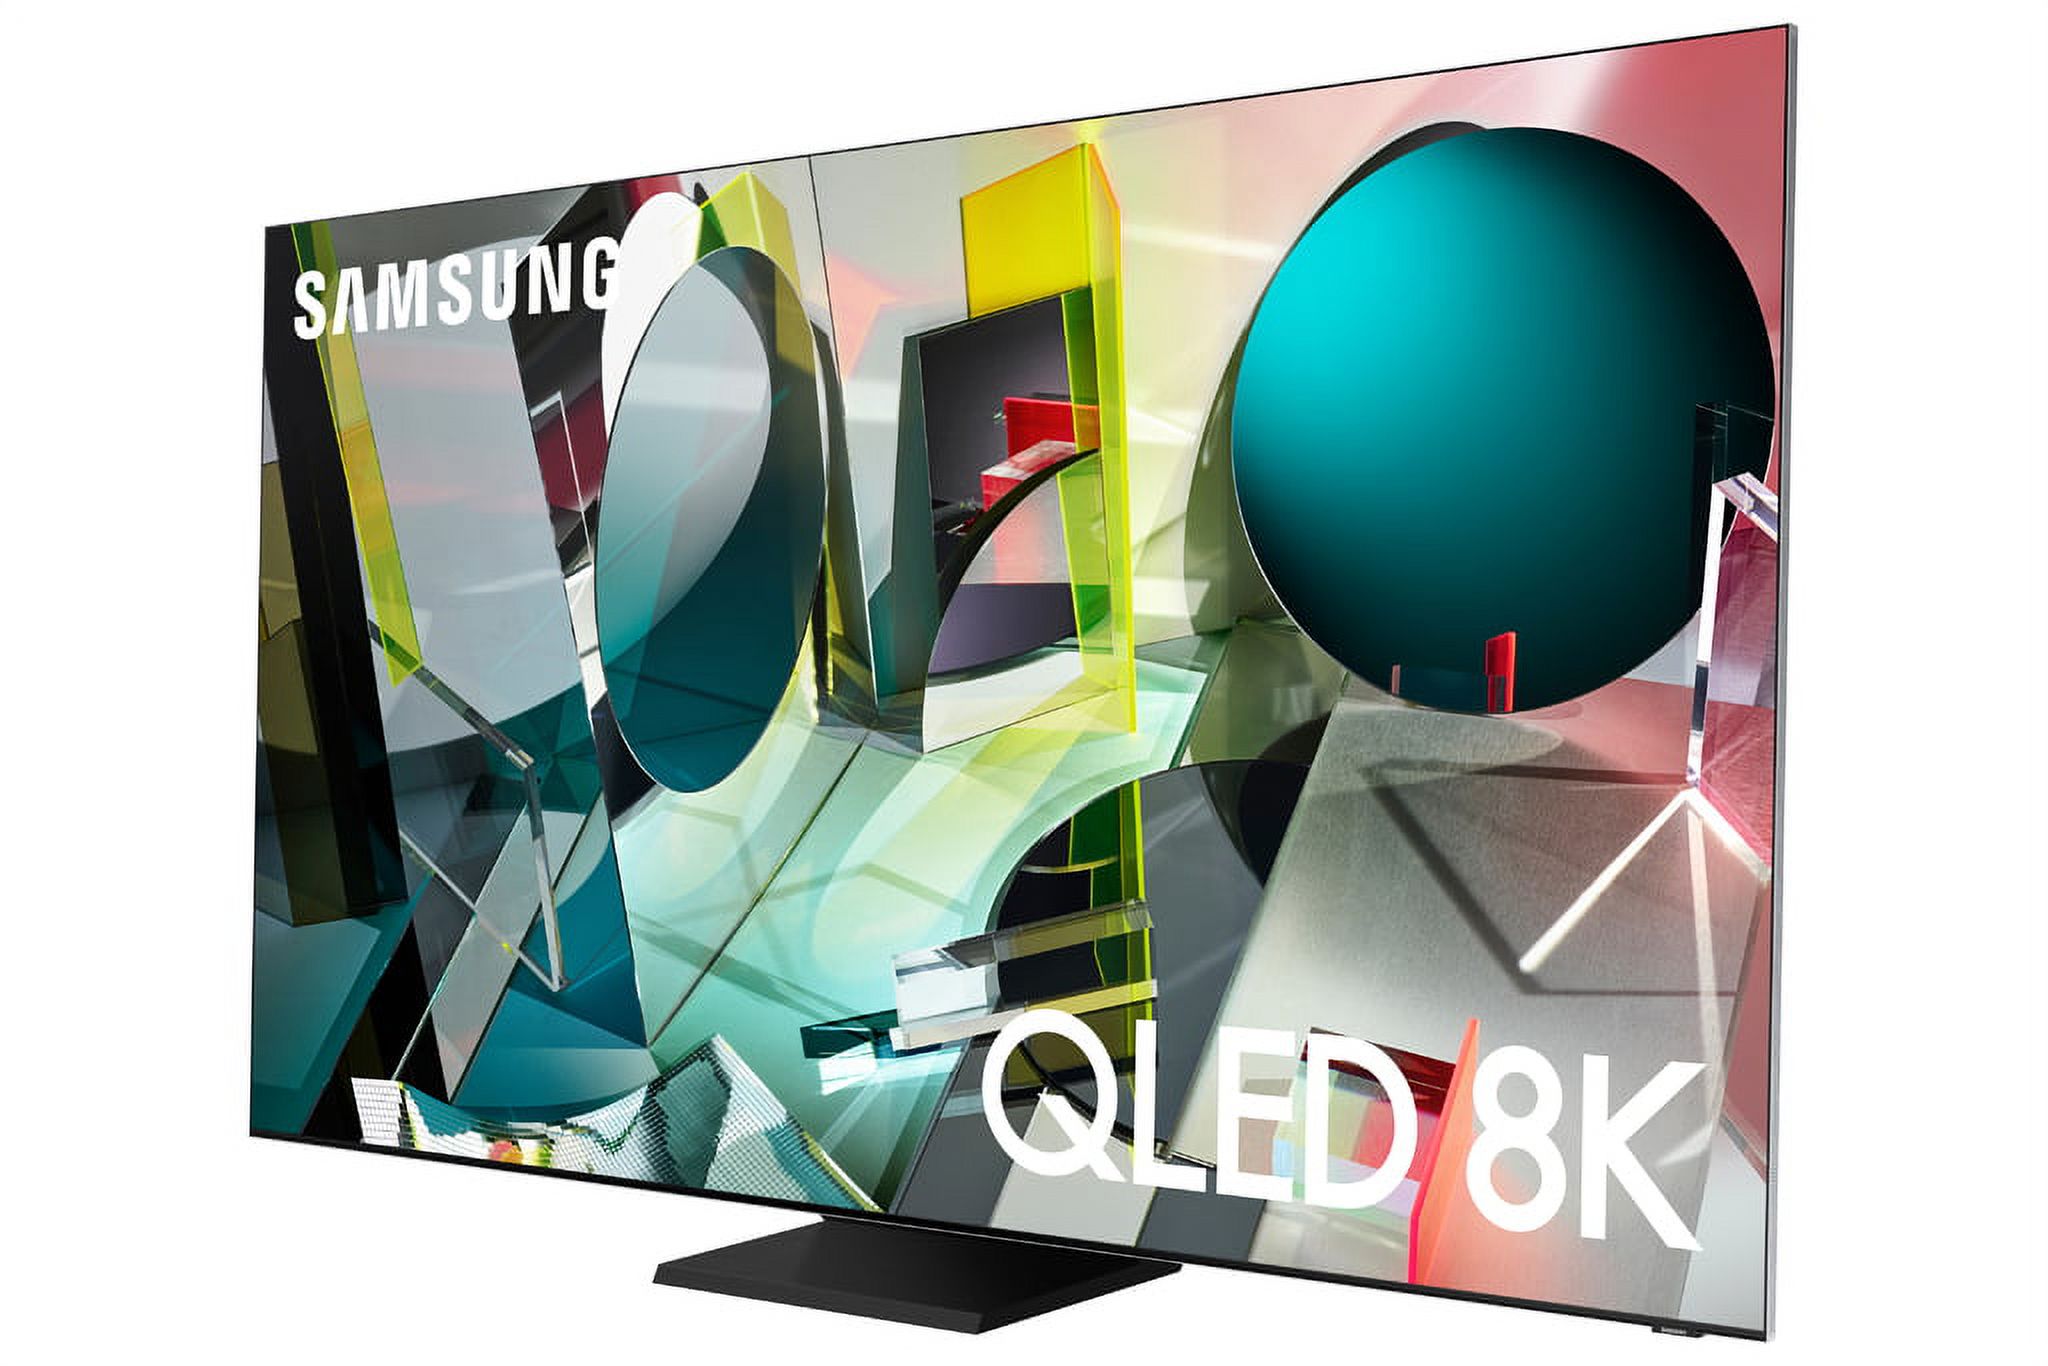 SAMSUNG 85" Class 8K Ultra HD (4320P) HDR Smart QLED TV QN85Q900T 2020 - image 12 of 17